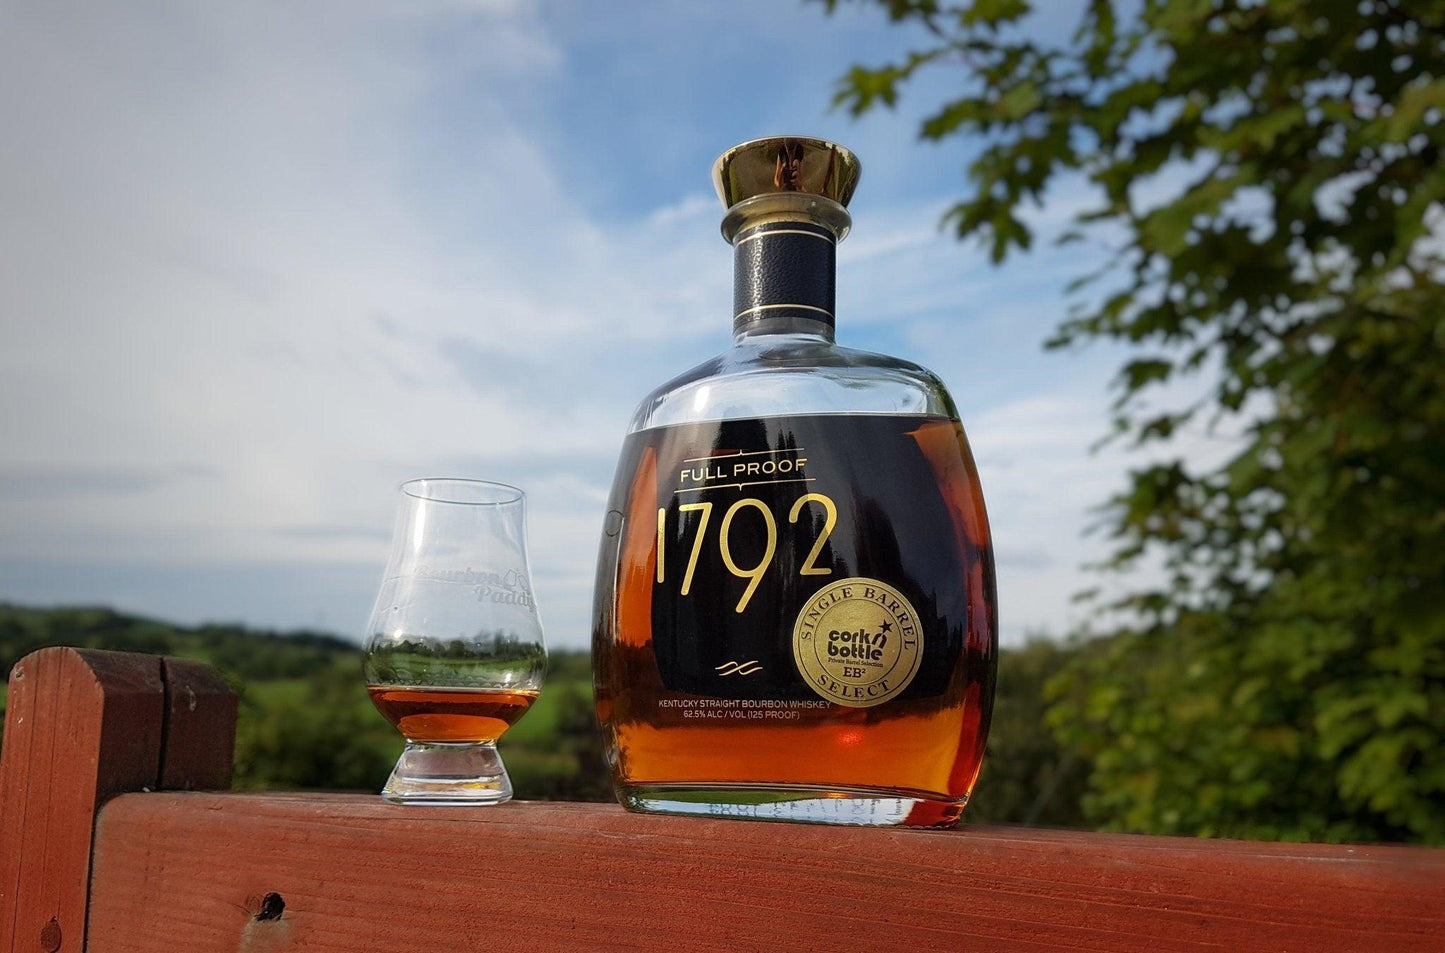 1792 Full Proof Kentucky Straight Bourbon Whiskey - Booze House